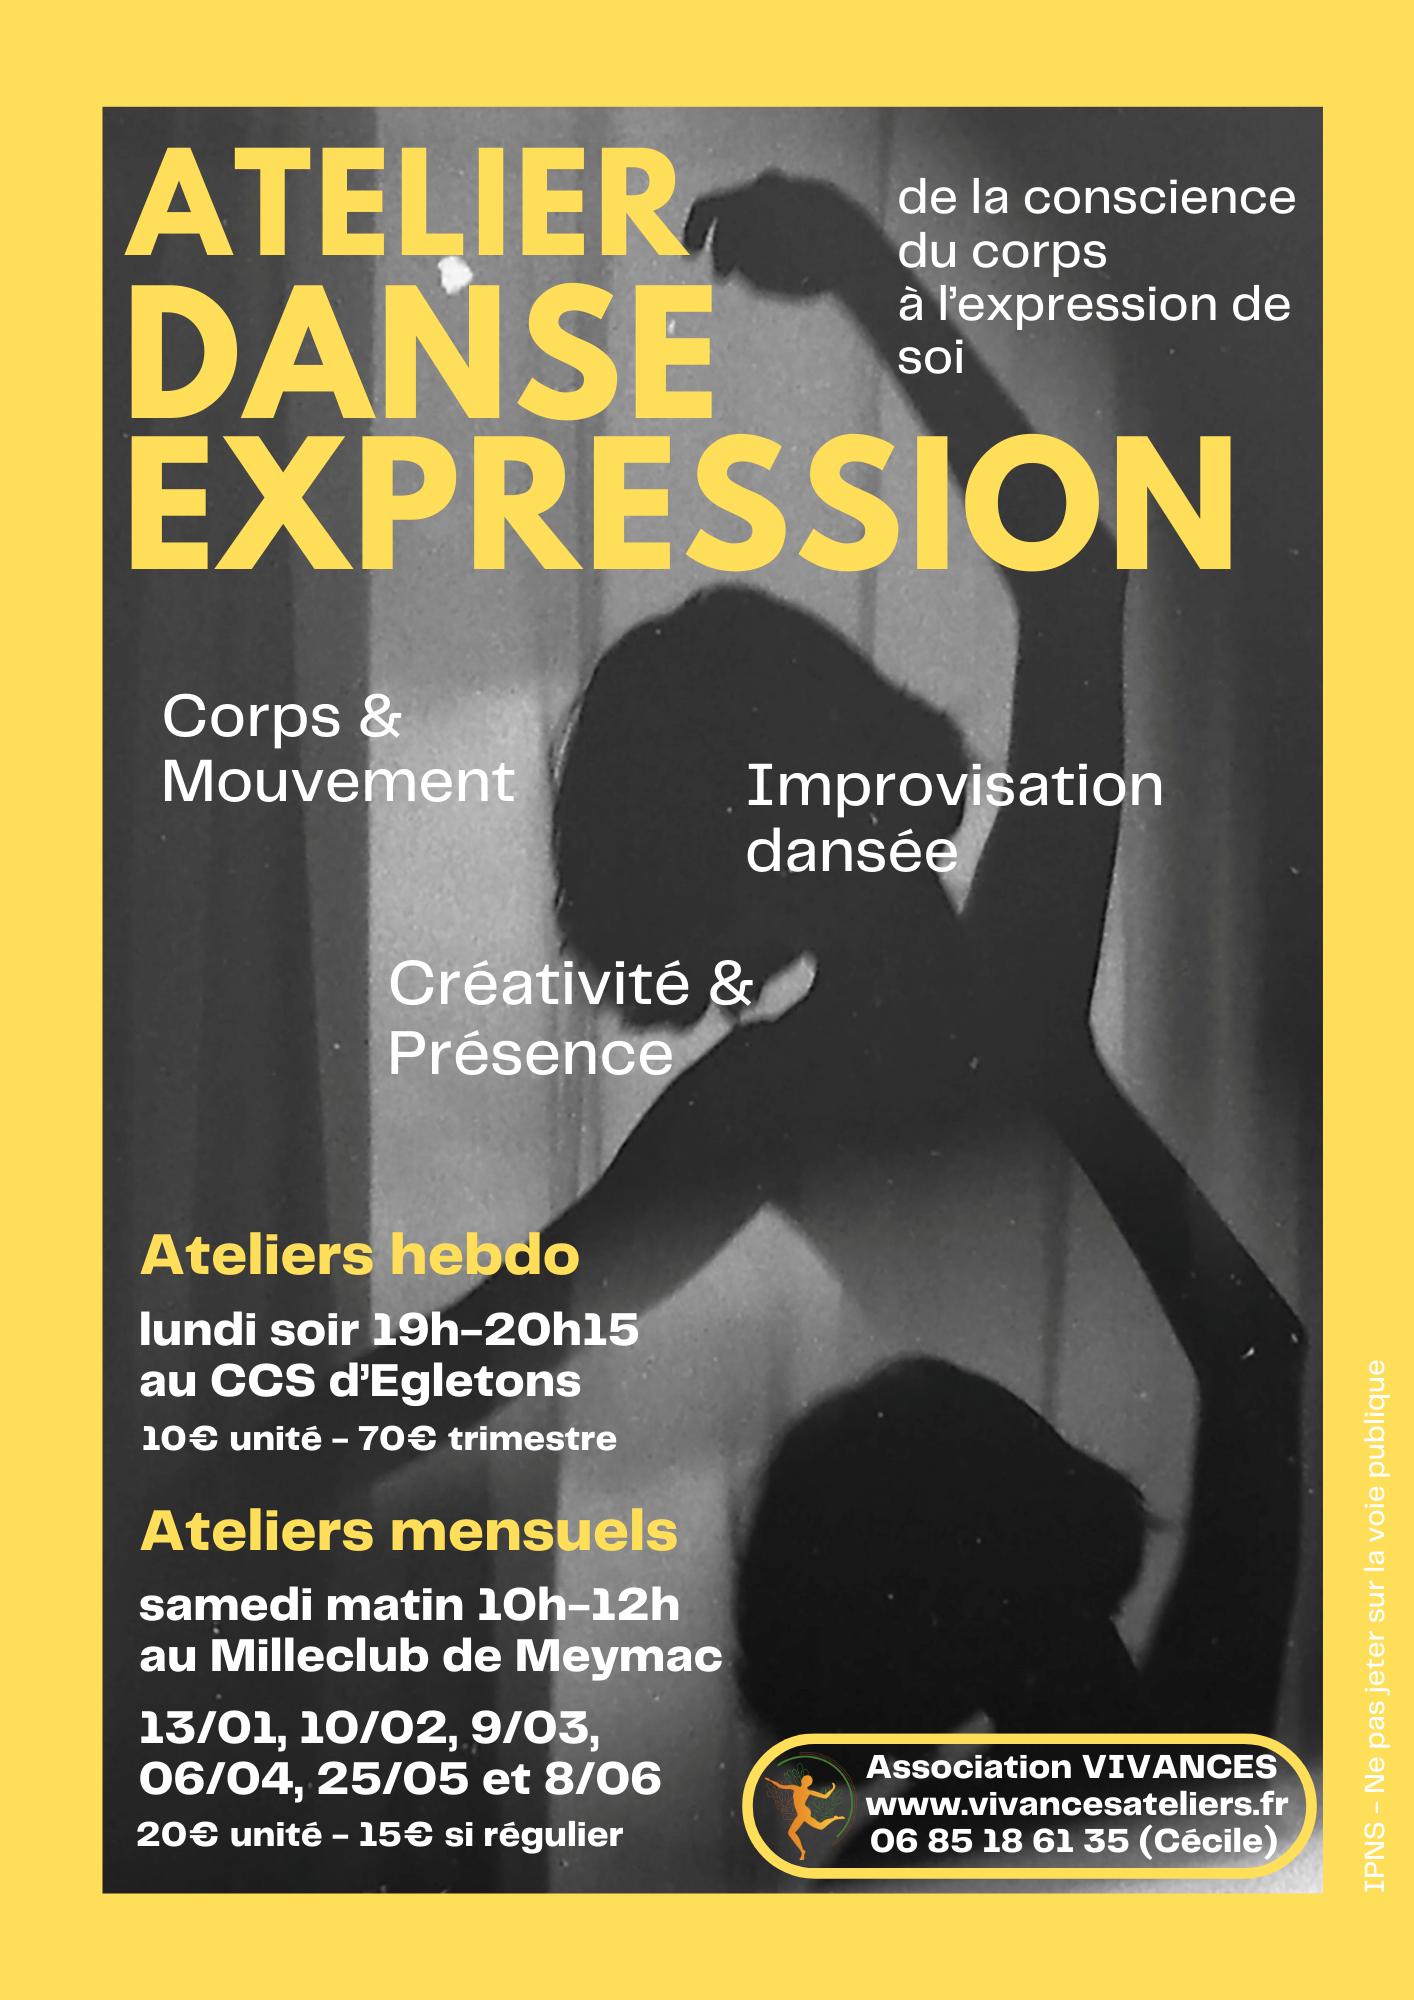 DanseExpressionV1 - 1